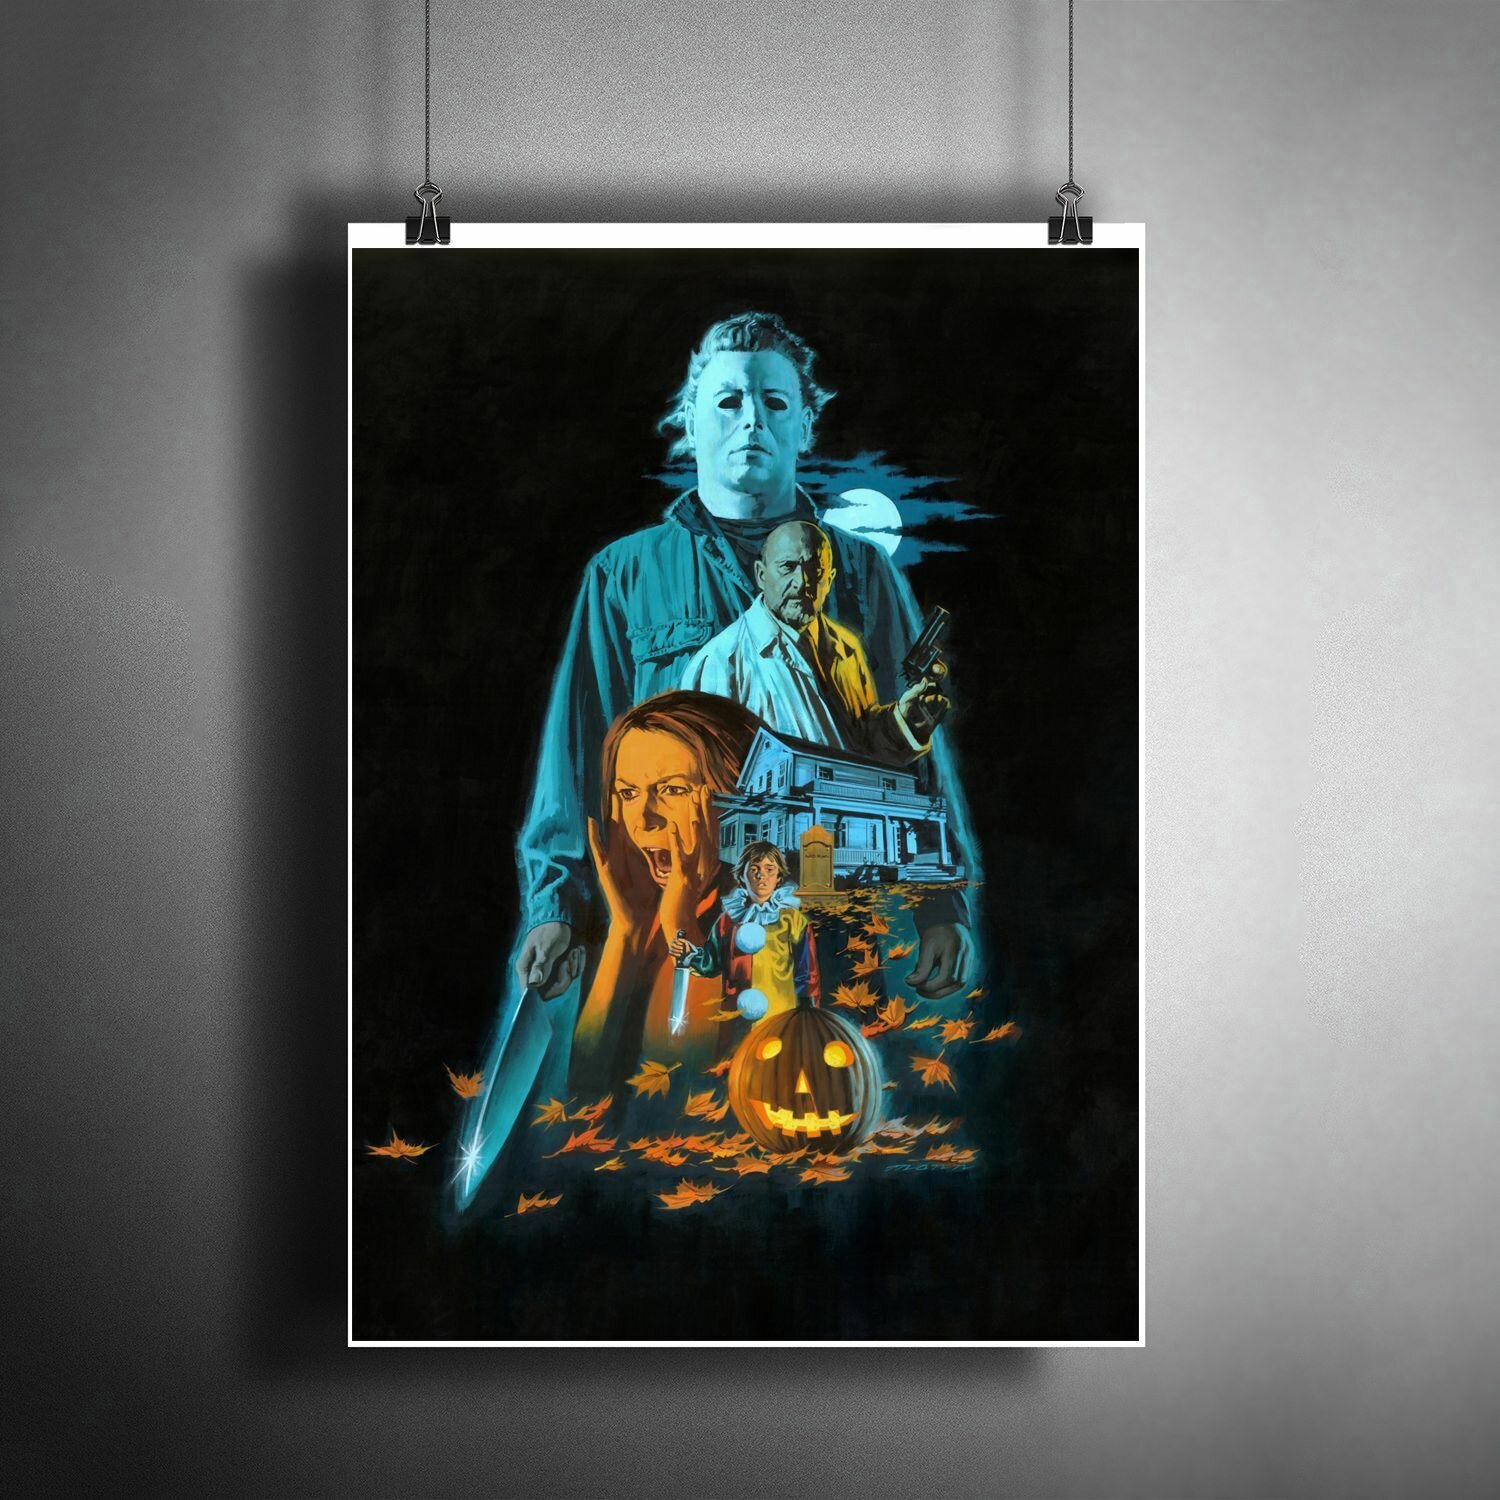 Постер плакат для интерьера "Фильм ужасов: Хэллоуин. Майкл Майерс. Halloween" / Декор дома, офиса, комнаты, квартиры, детской A3 (297 x 420 мм)